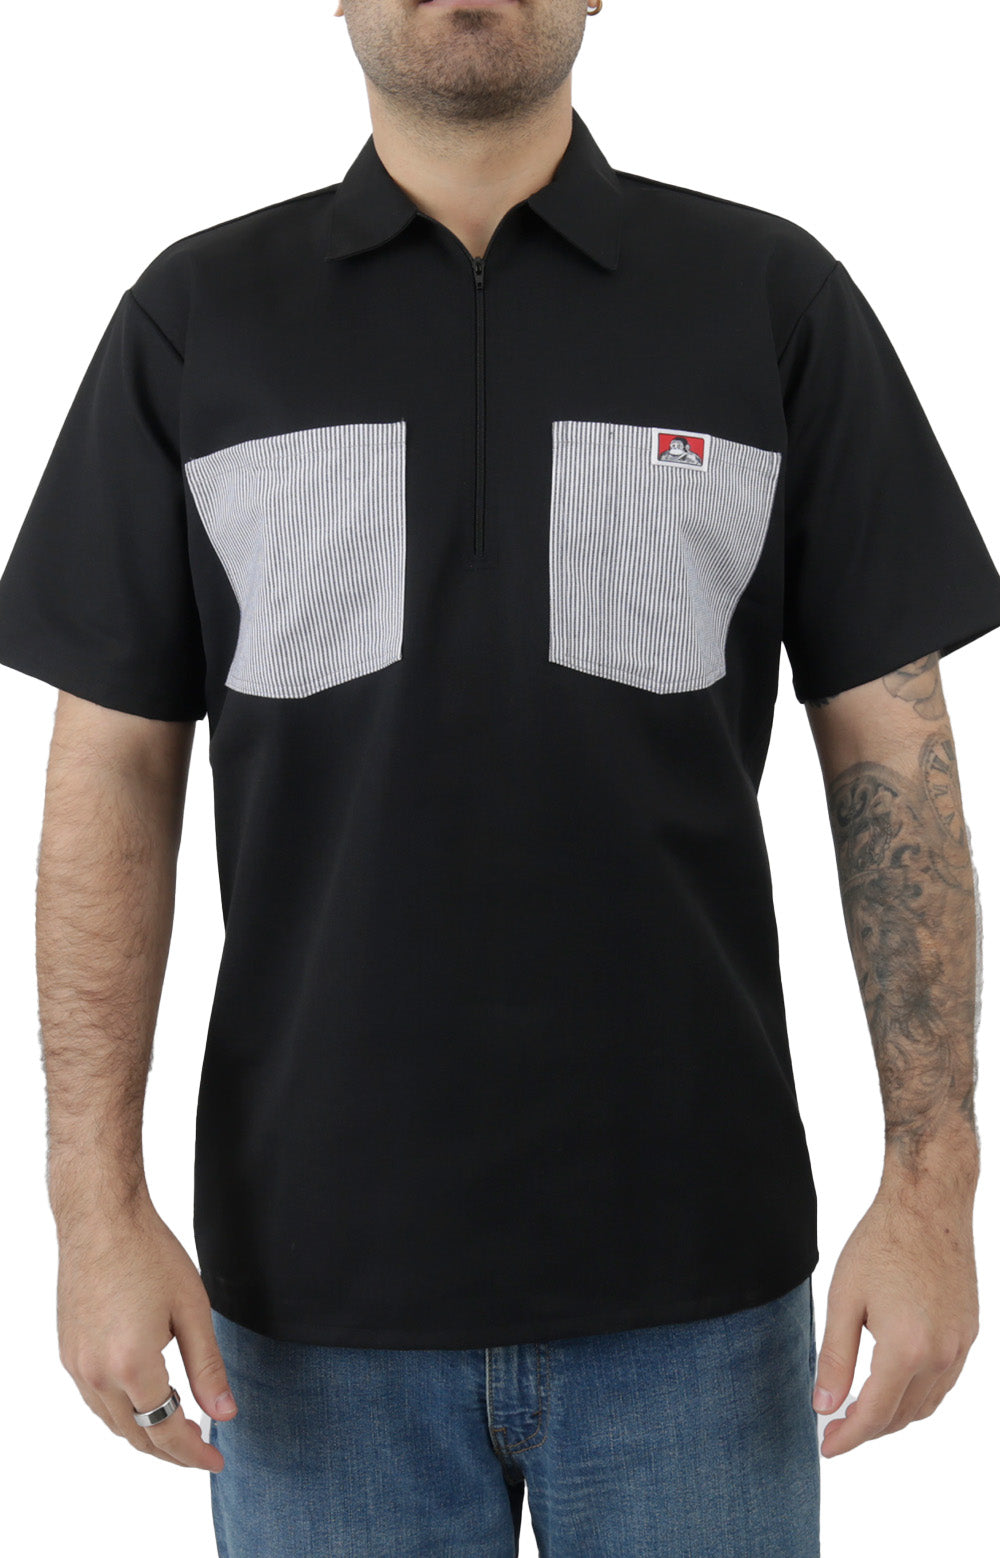 Short Sleeve Solid w/ Striped Pockets 1/2 Zip Shirt - Black